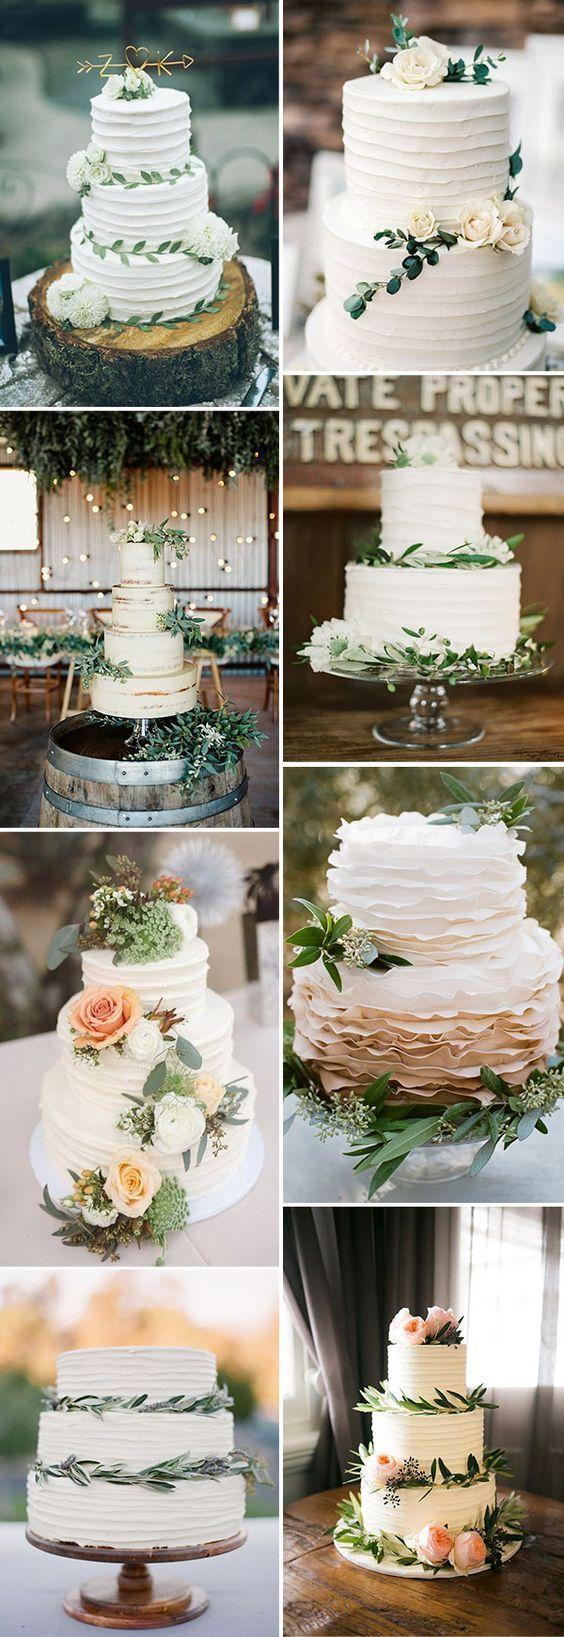 زفاف - 50 Steal-Worthy Wedding Cake Ideas For Your Special Day